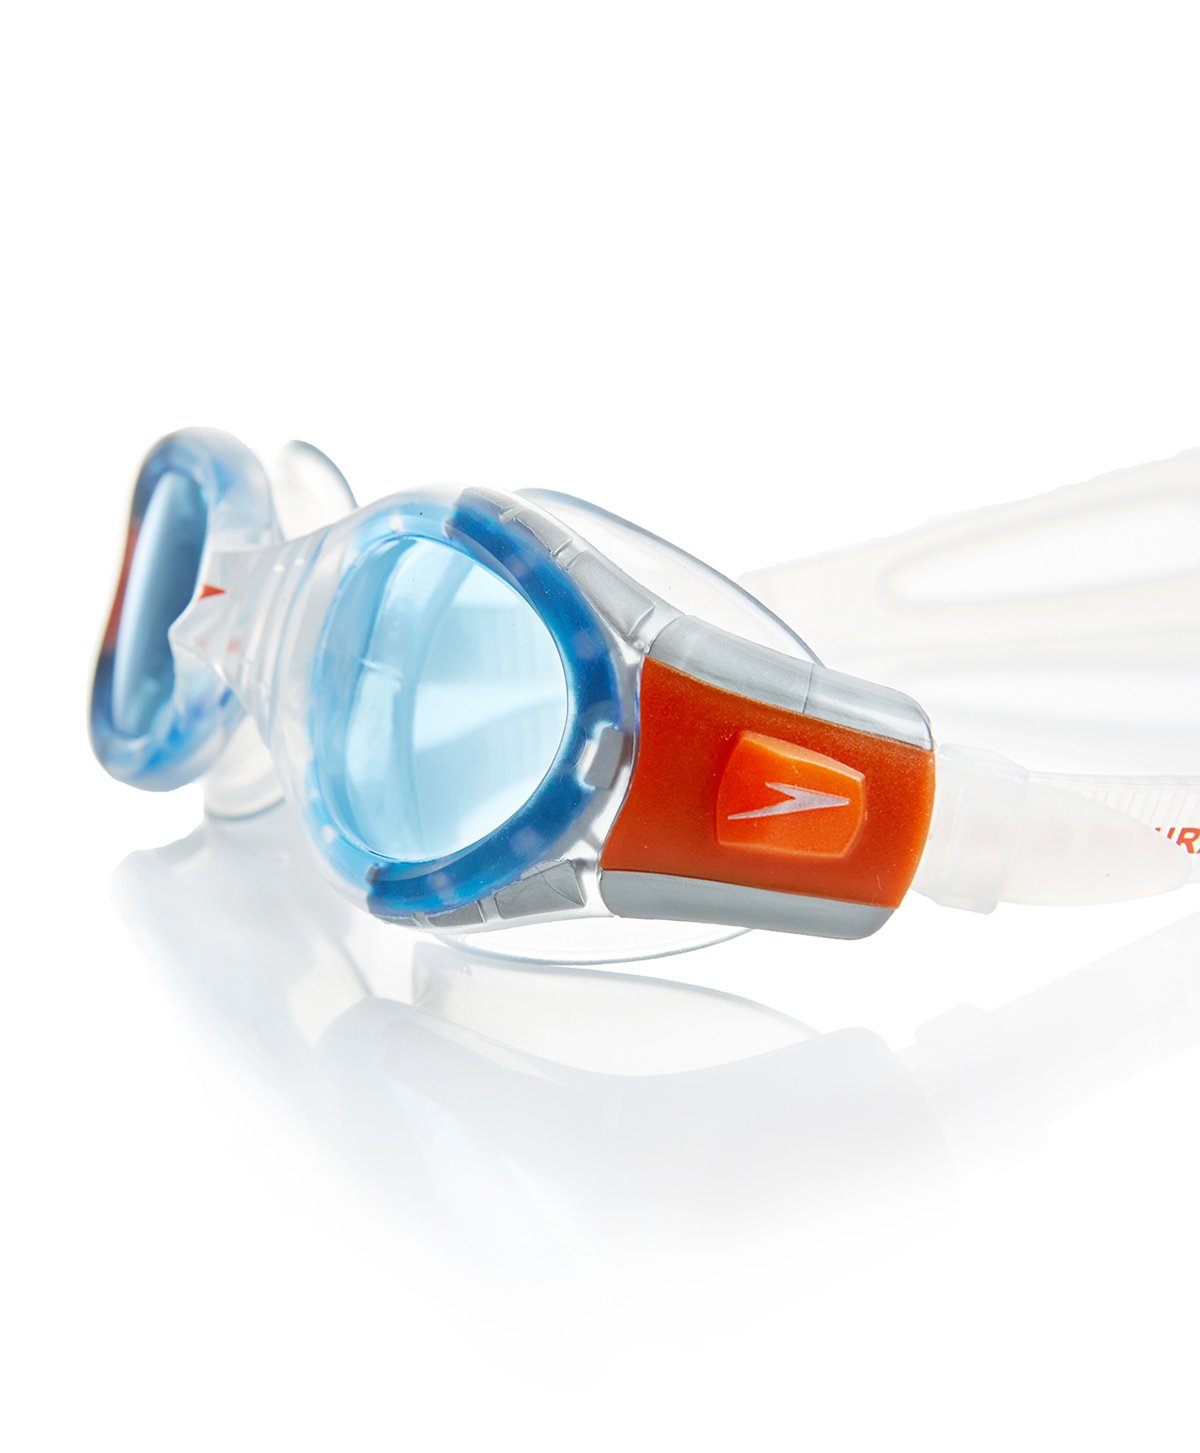 Speedo Futura Biofuse Goggles, Junior One Size (Clear/Blue) - Best Price online Prokicksports.com